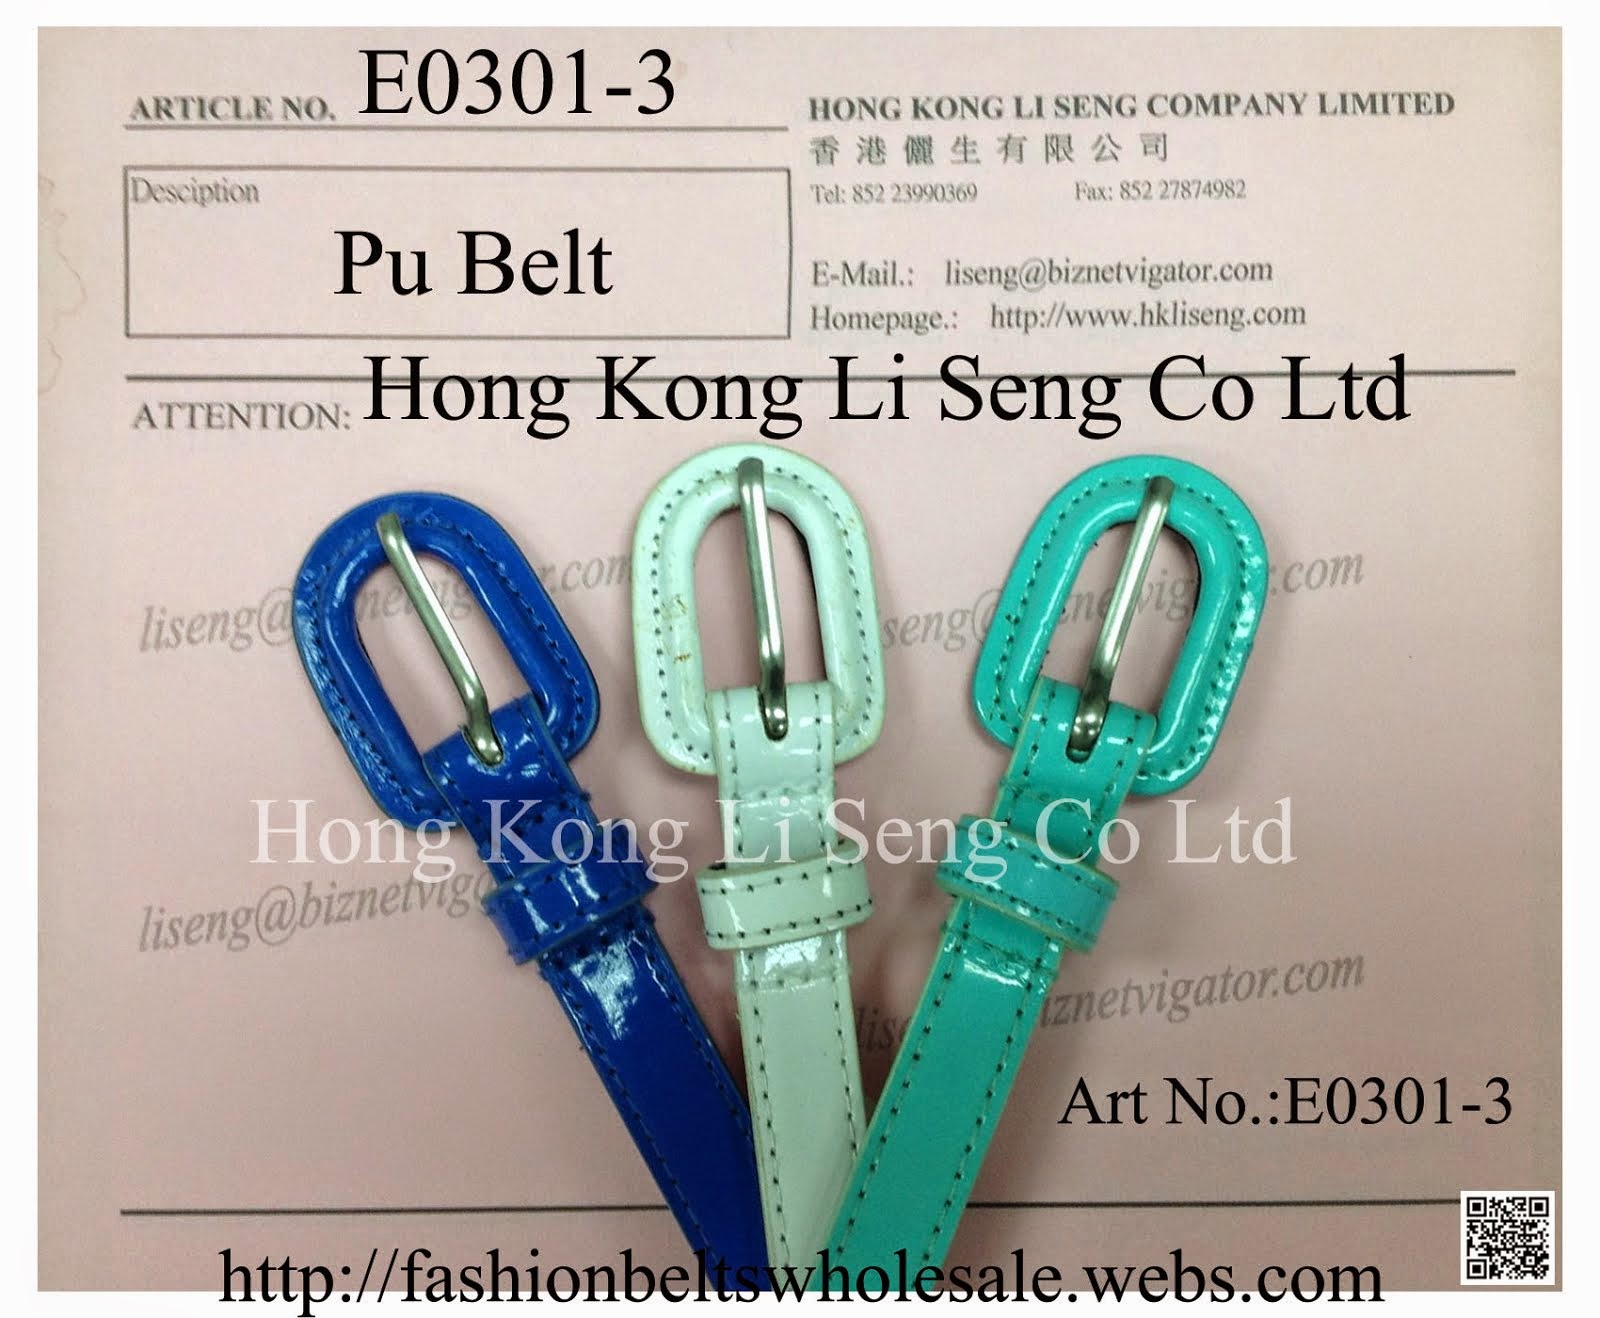 Girls Skinny Belt Manufacturer and Supplier - Hong Kong Li Seng Co Ltd